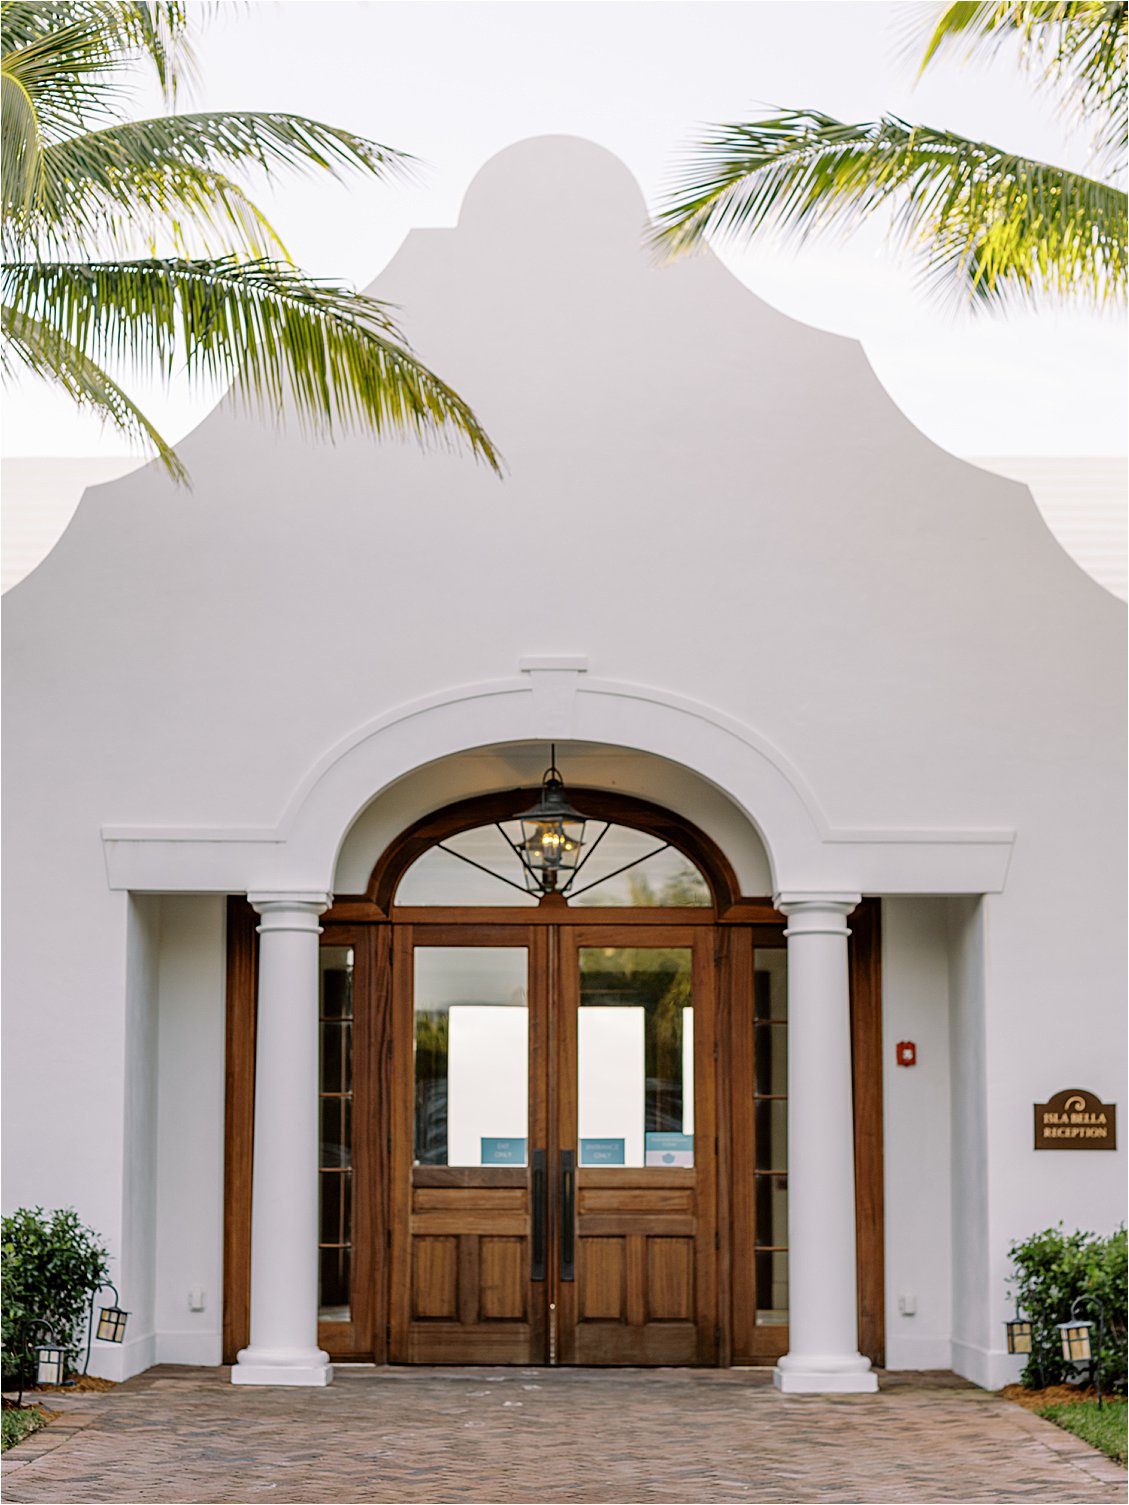 White Architecture Isla Bella Resort in Marathon Key with Florida + Destination Film wedding photographer Renee Hollingshead.